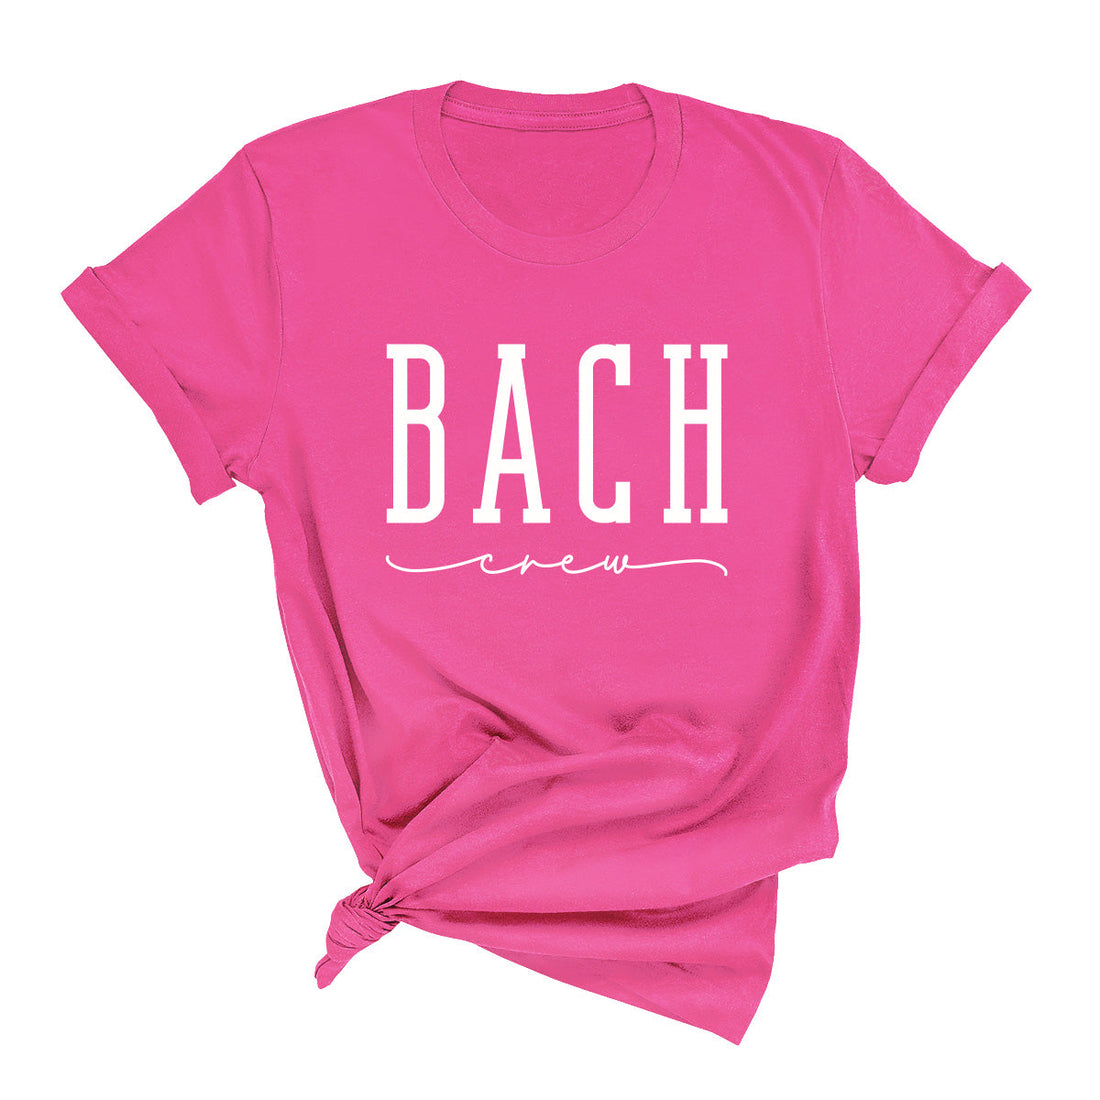 Bach Crew T-Shirt